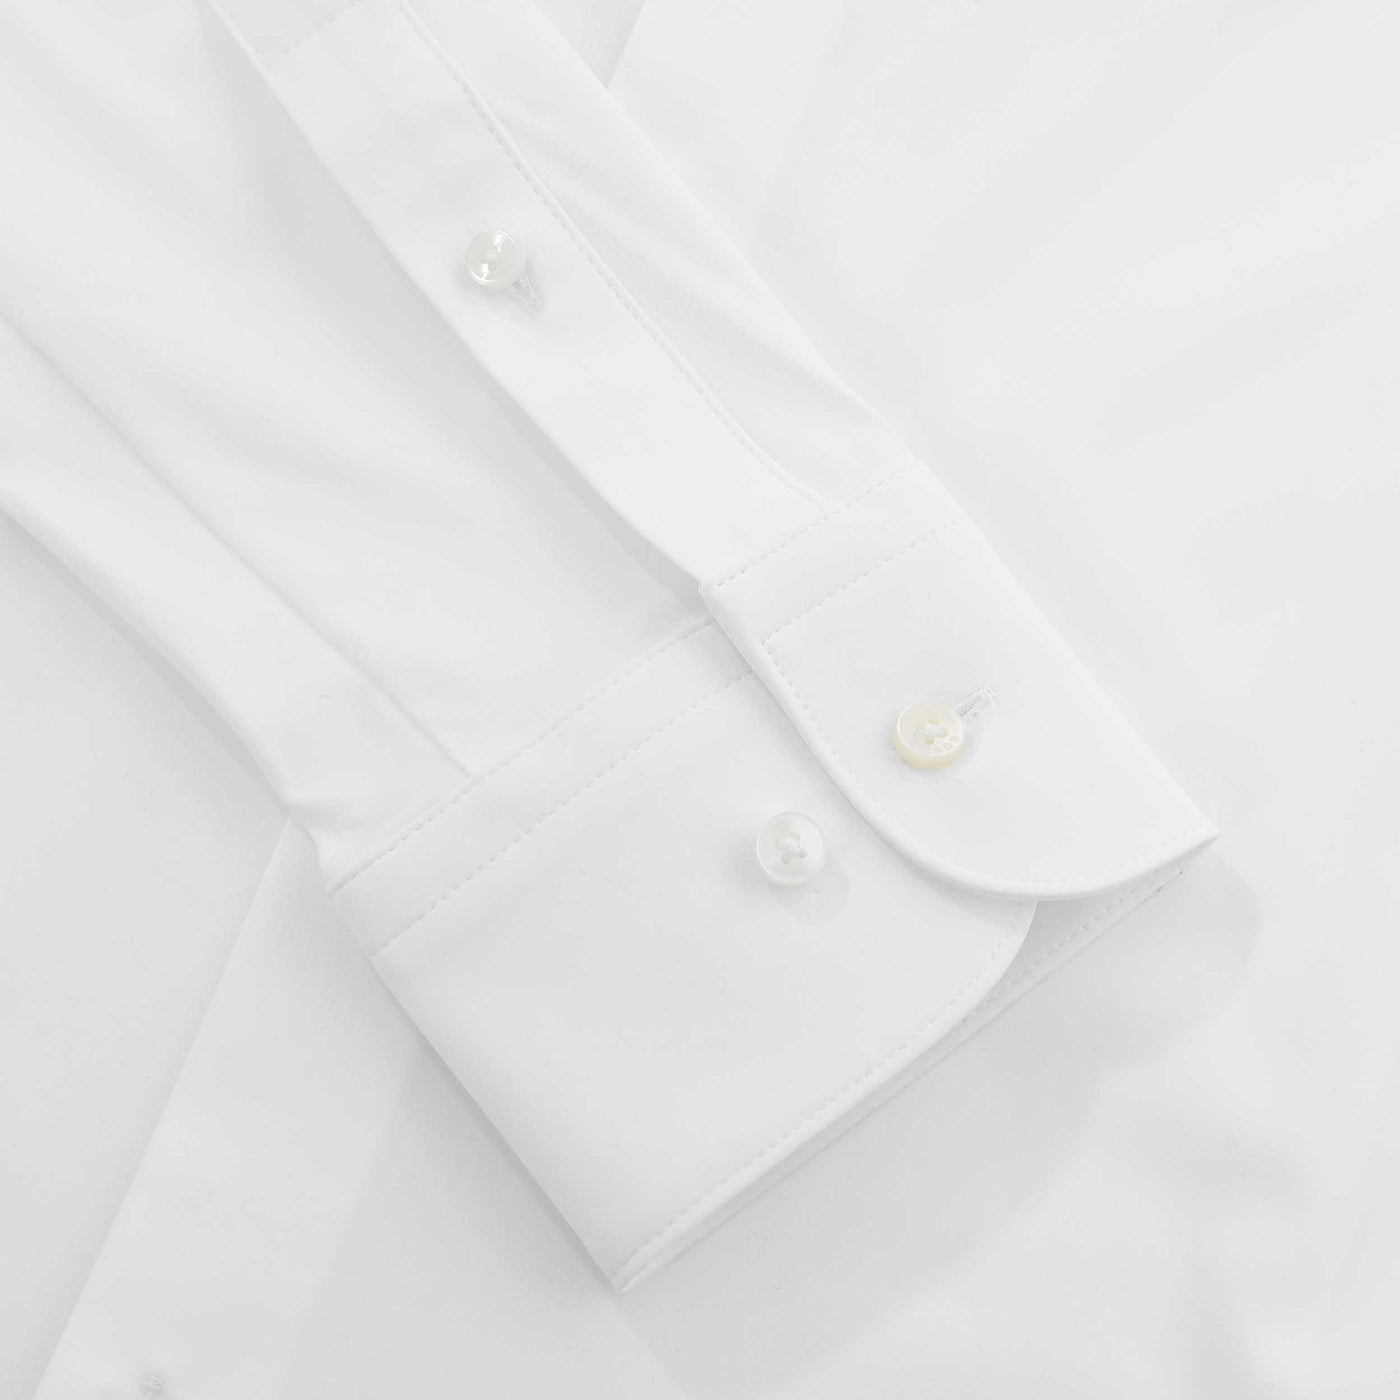 BOSS P Hank S Kent C1 222 Shirt in White cuff